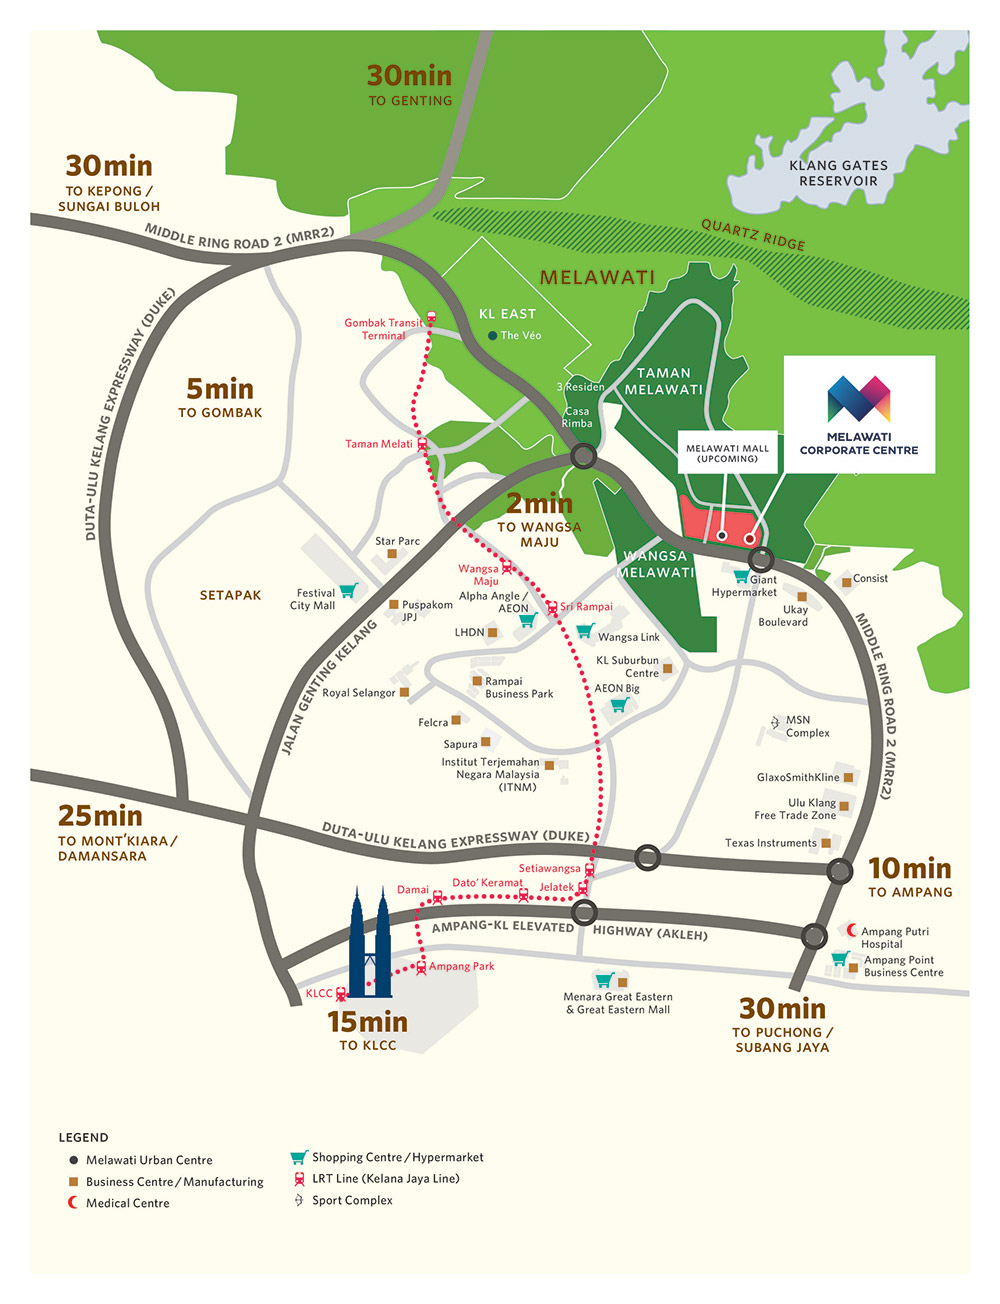 Melawati Corporate Centre Connectivity Map 